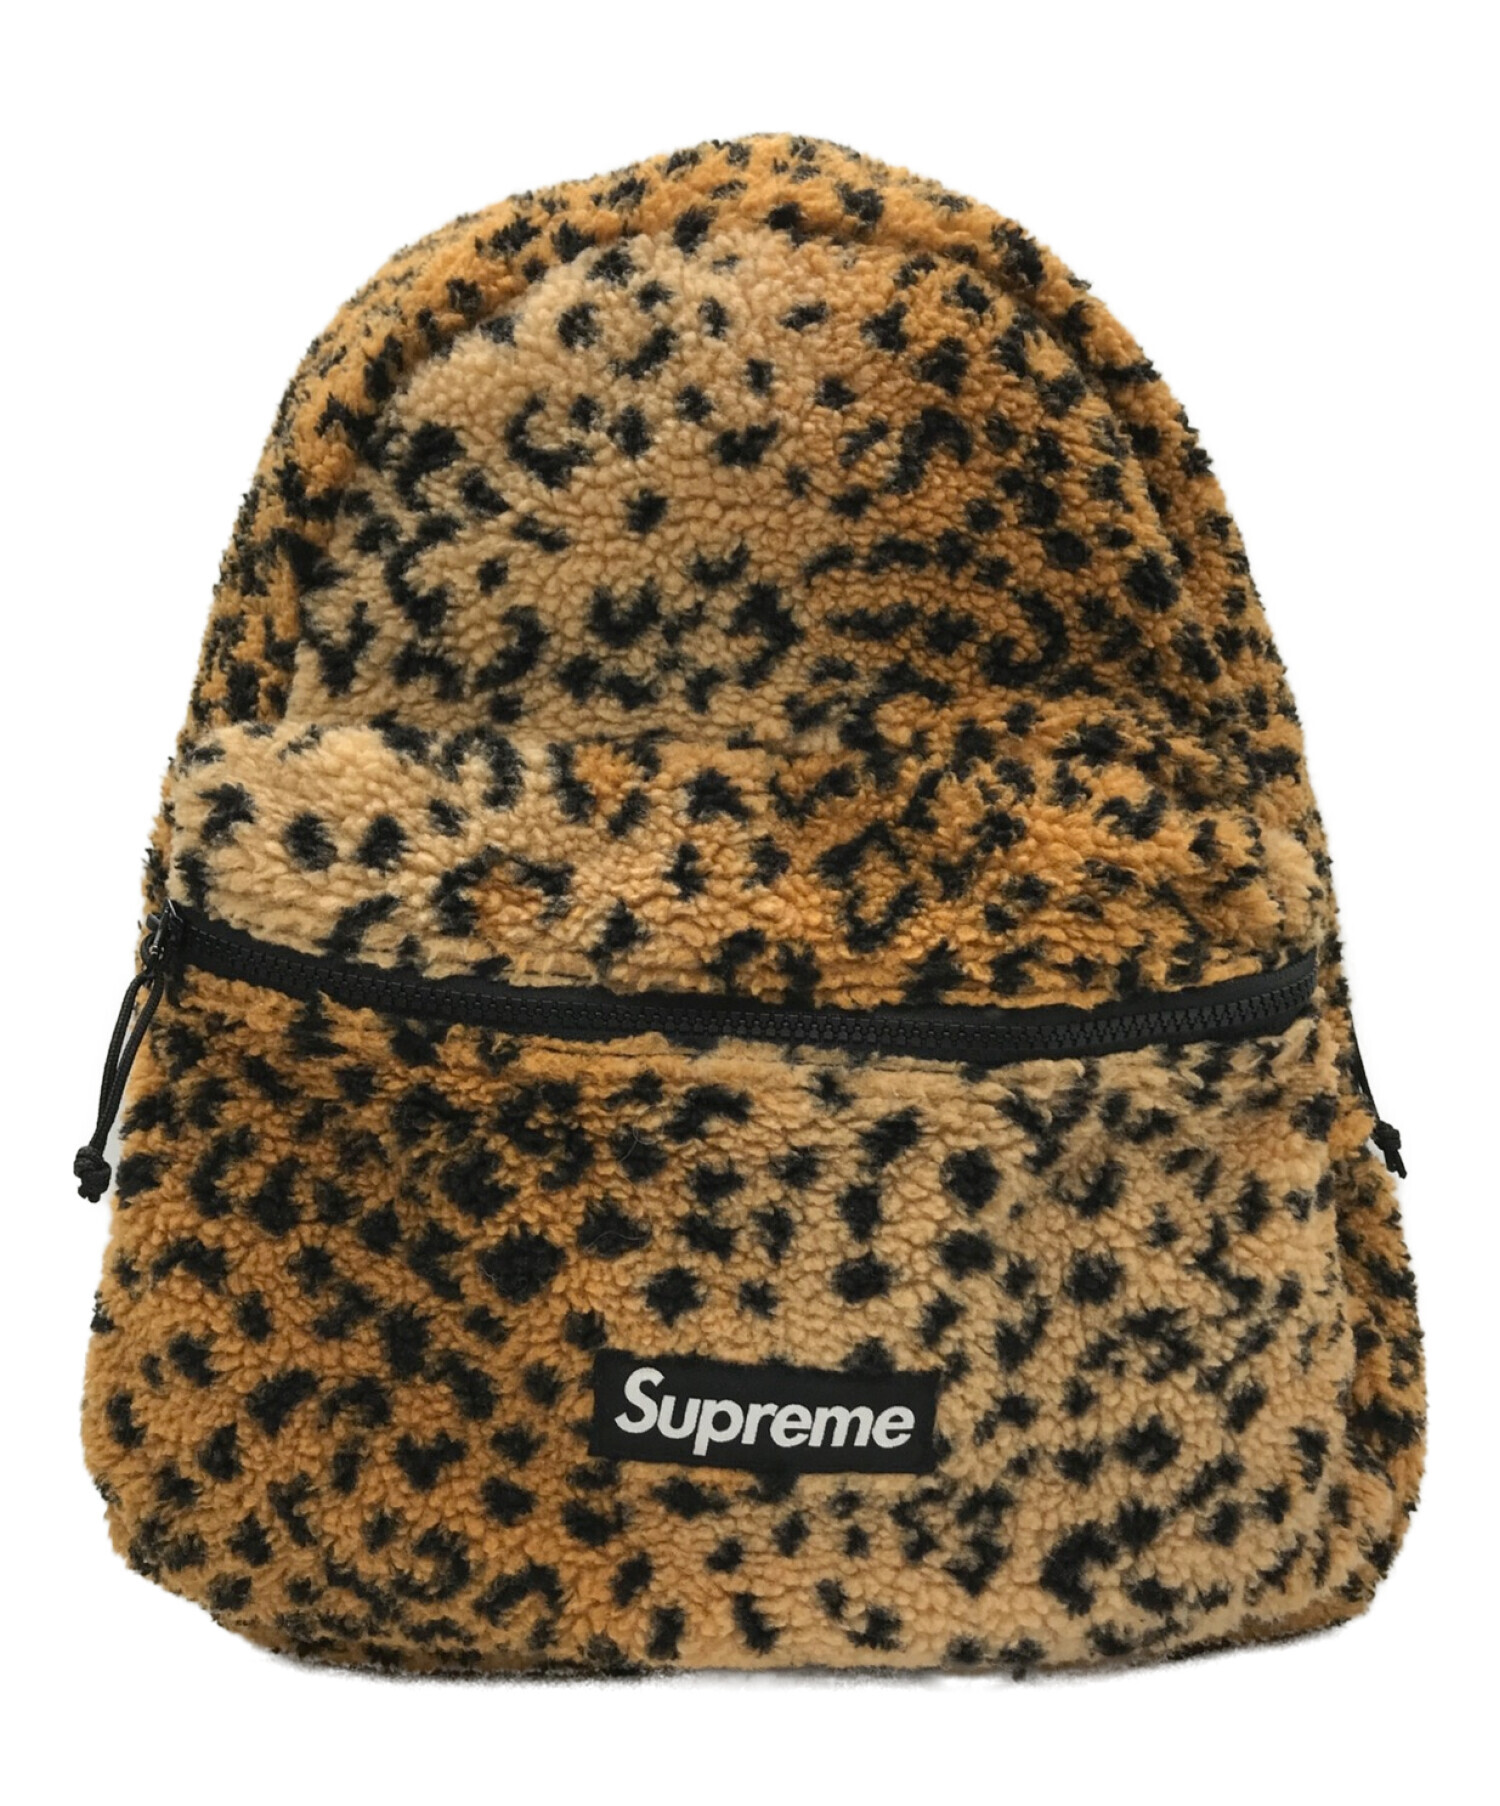 supreme fleece backpack レオパード - バッグパック/リュック